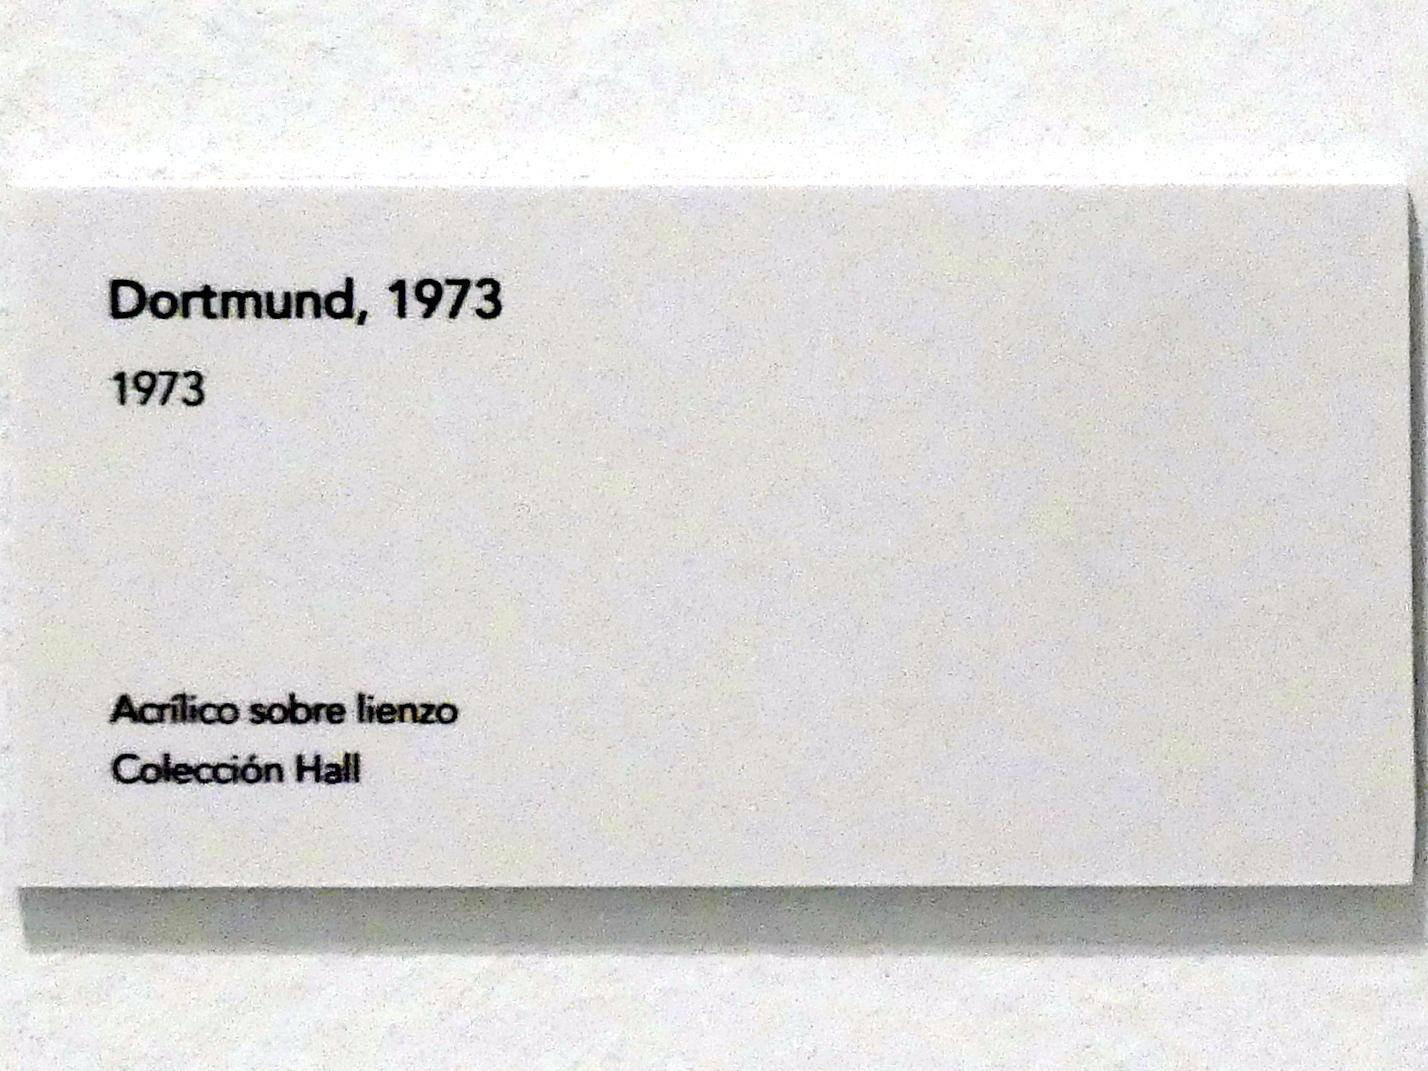 Jörg Immendorff (1965–2007), Dortmund, Madrid, Museo Reina Sofía, Ausstellung "Jörg Immendorff - The Task of the Painter" vom 30.10.2019-13.04.2020, Saal 3, 1973, Bild 2/2